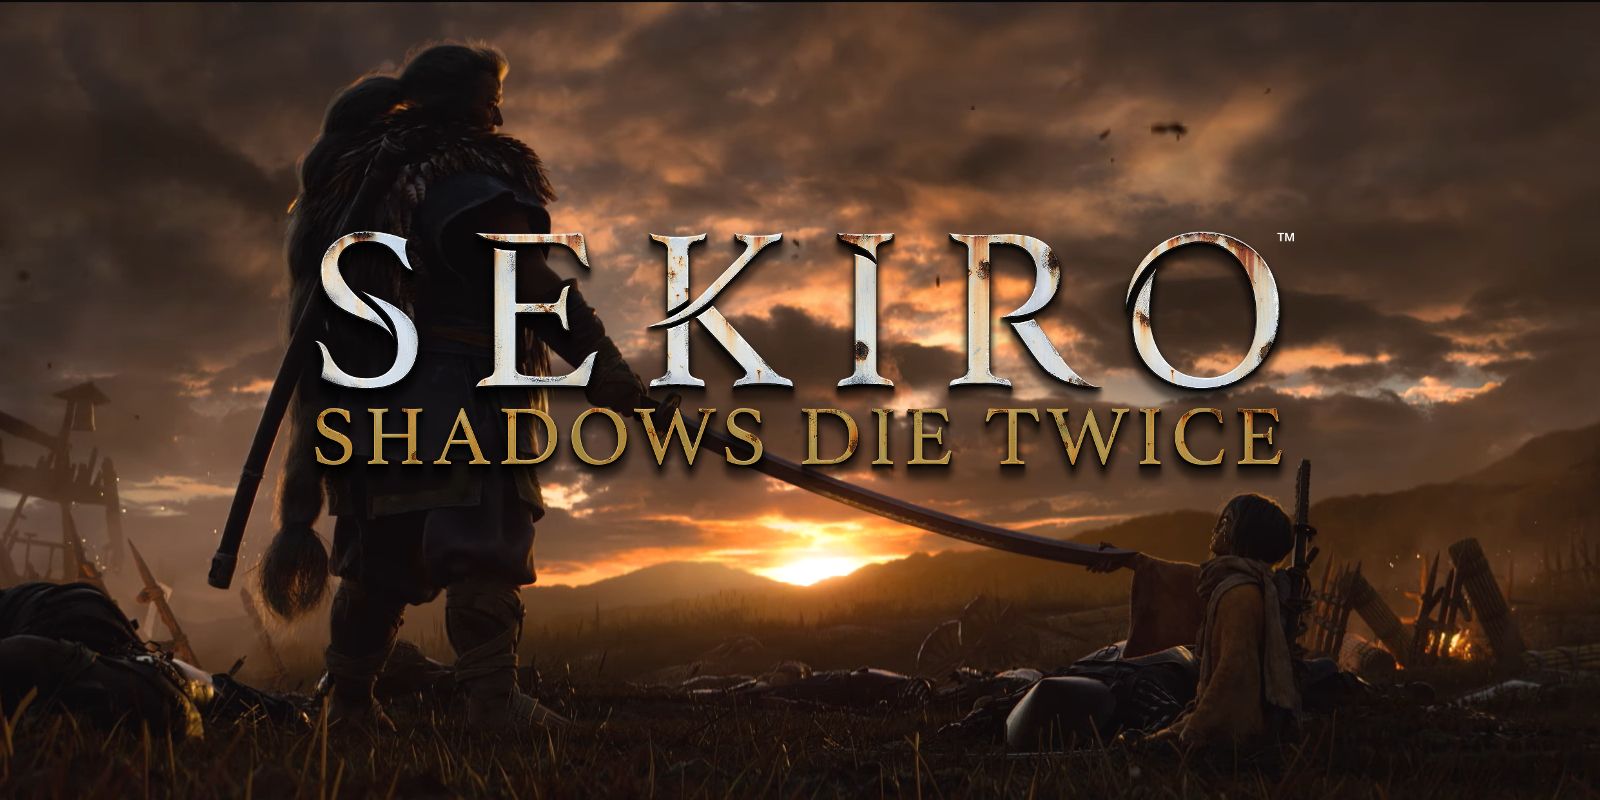 Title card of Sekiro: Shadows Die Twice